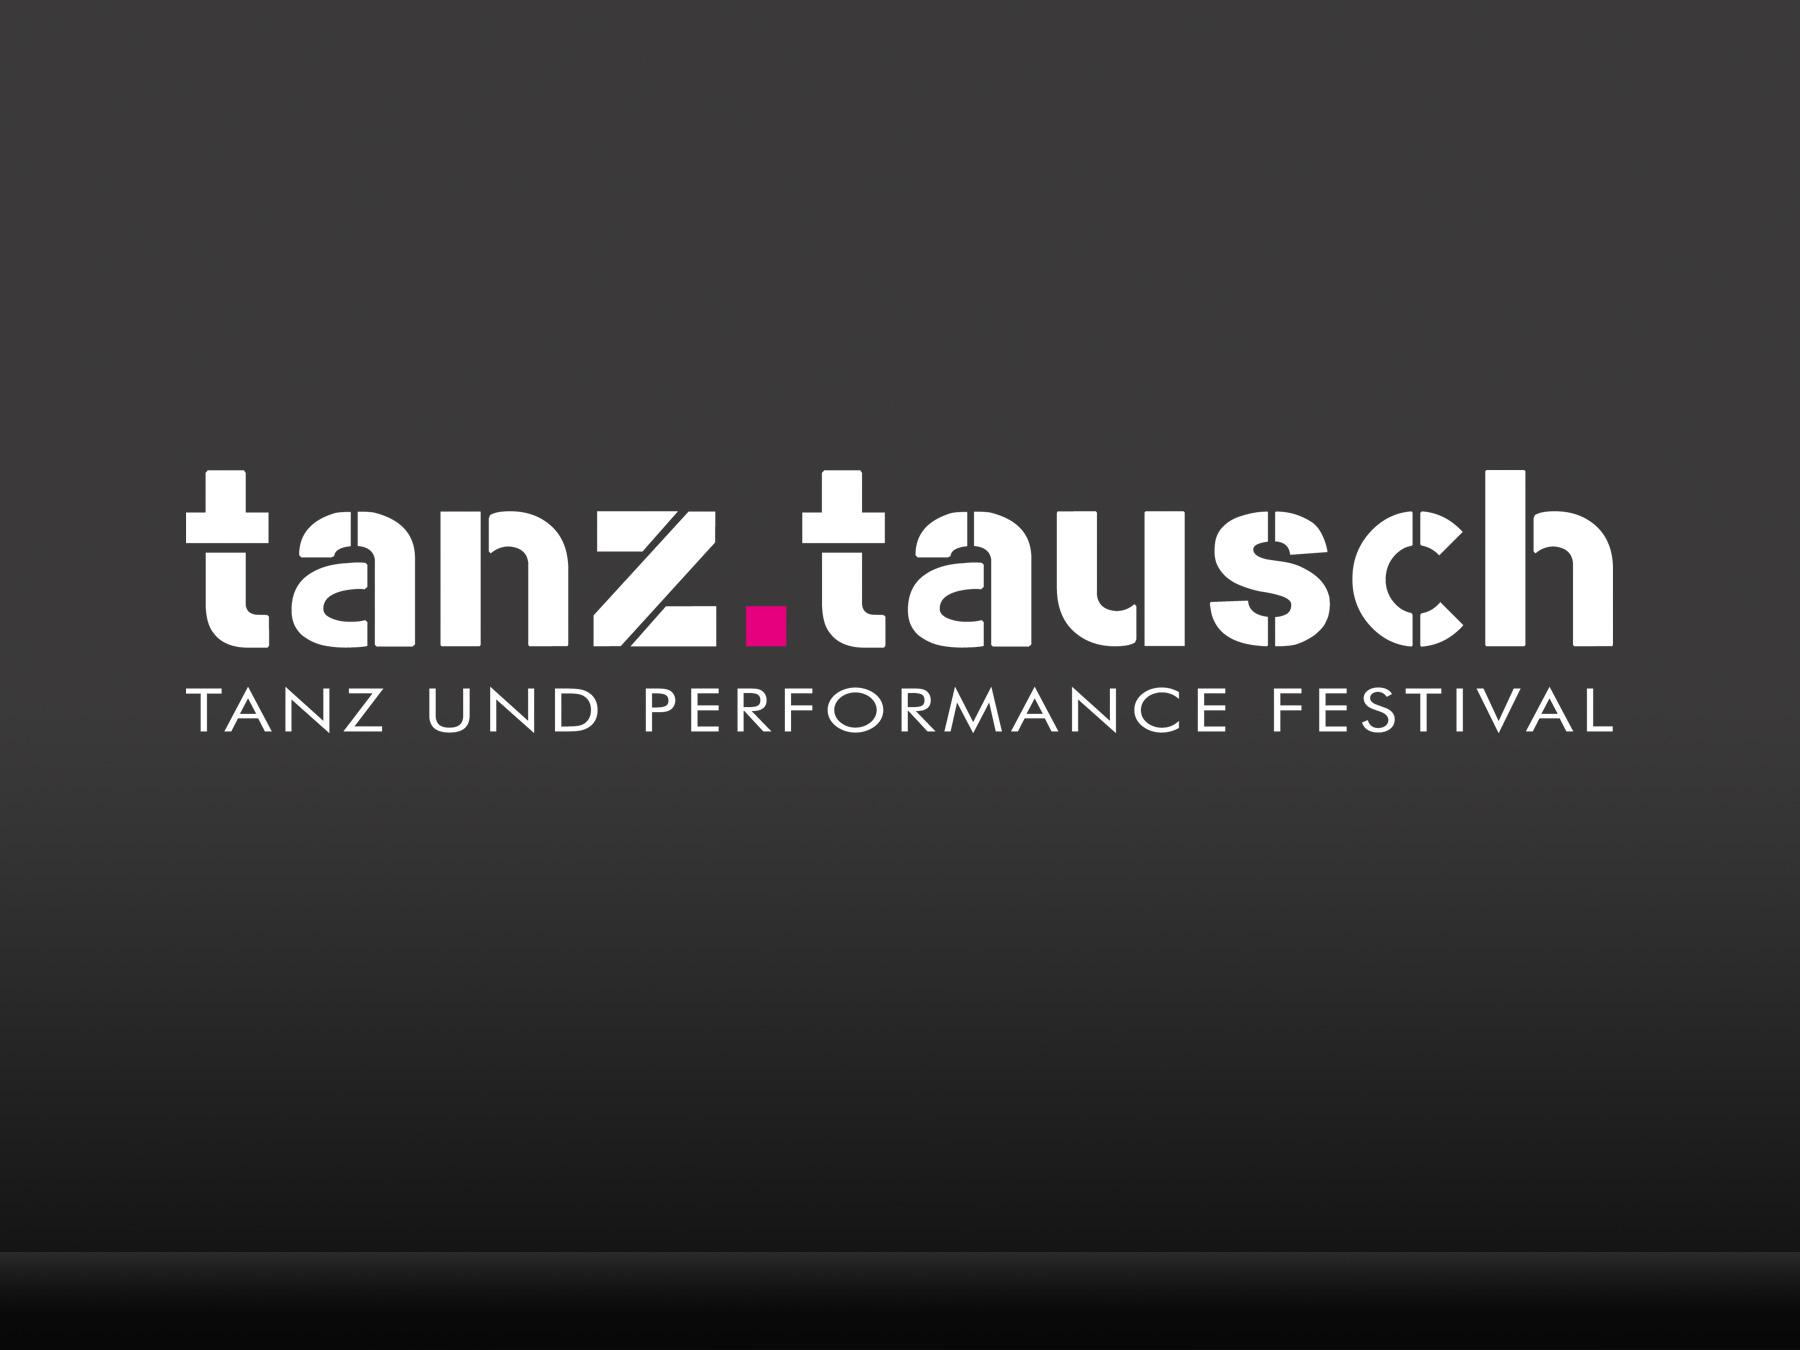 tanz.tausch festival